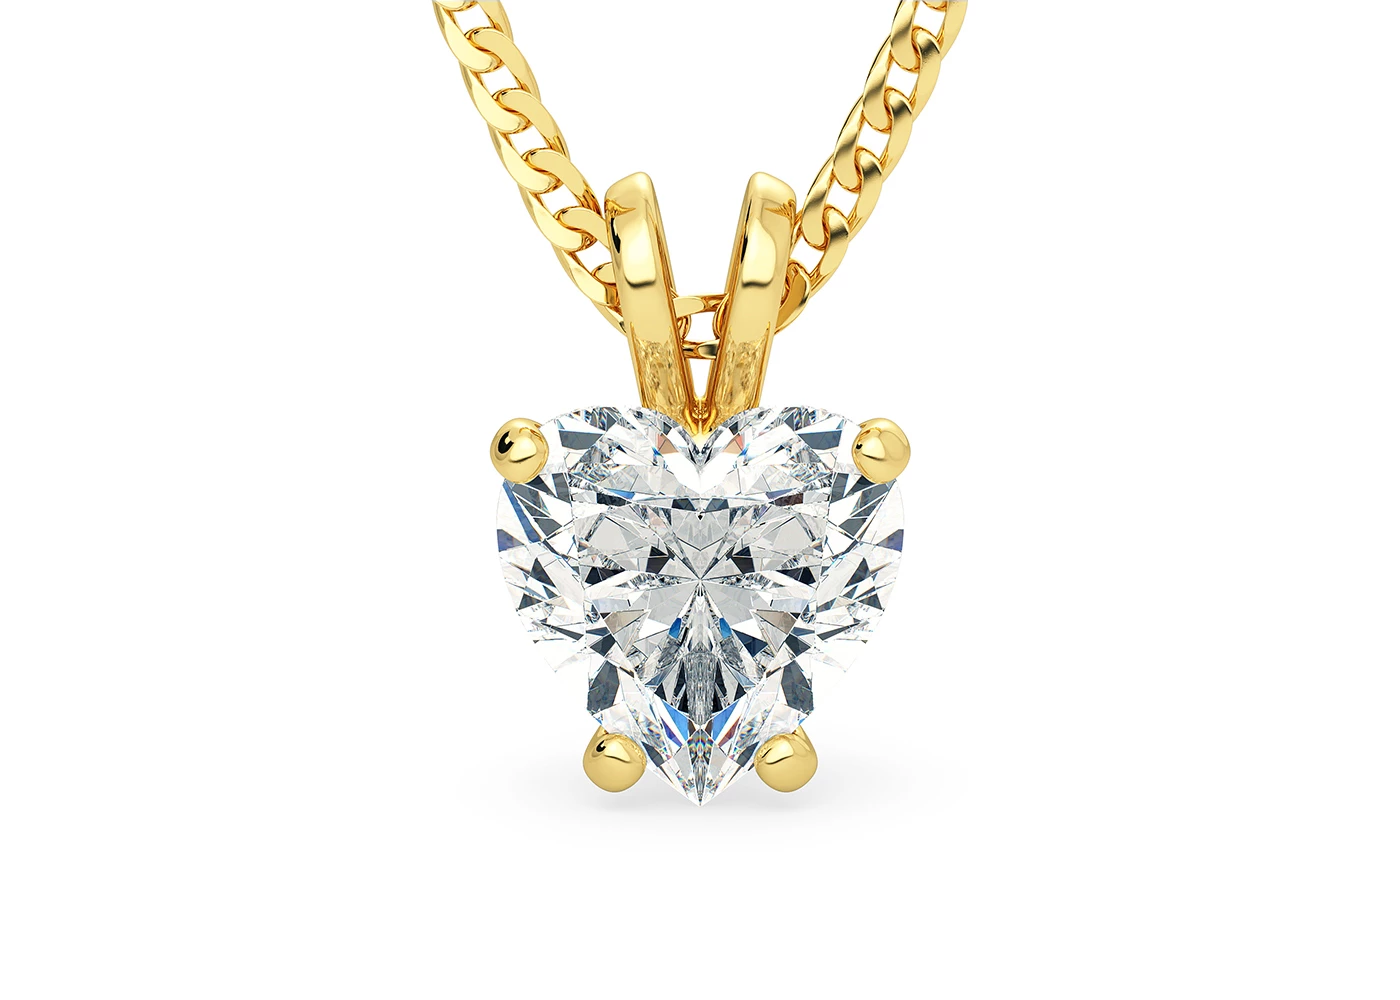 One Carat Heart Diamond Pendant in 18K Yellow Gold